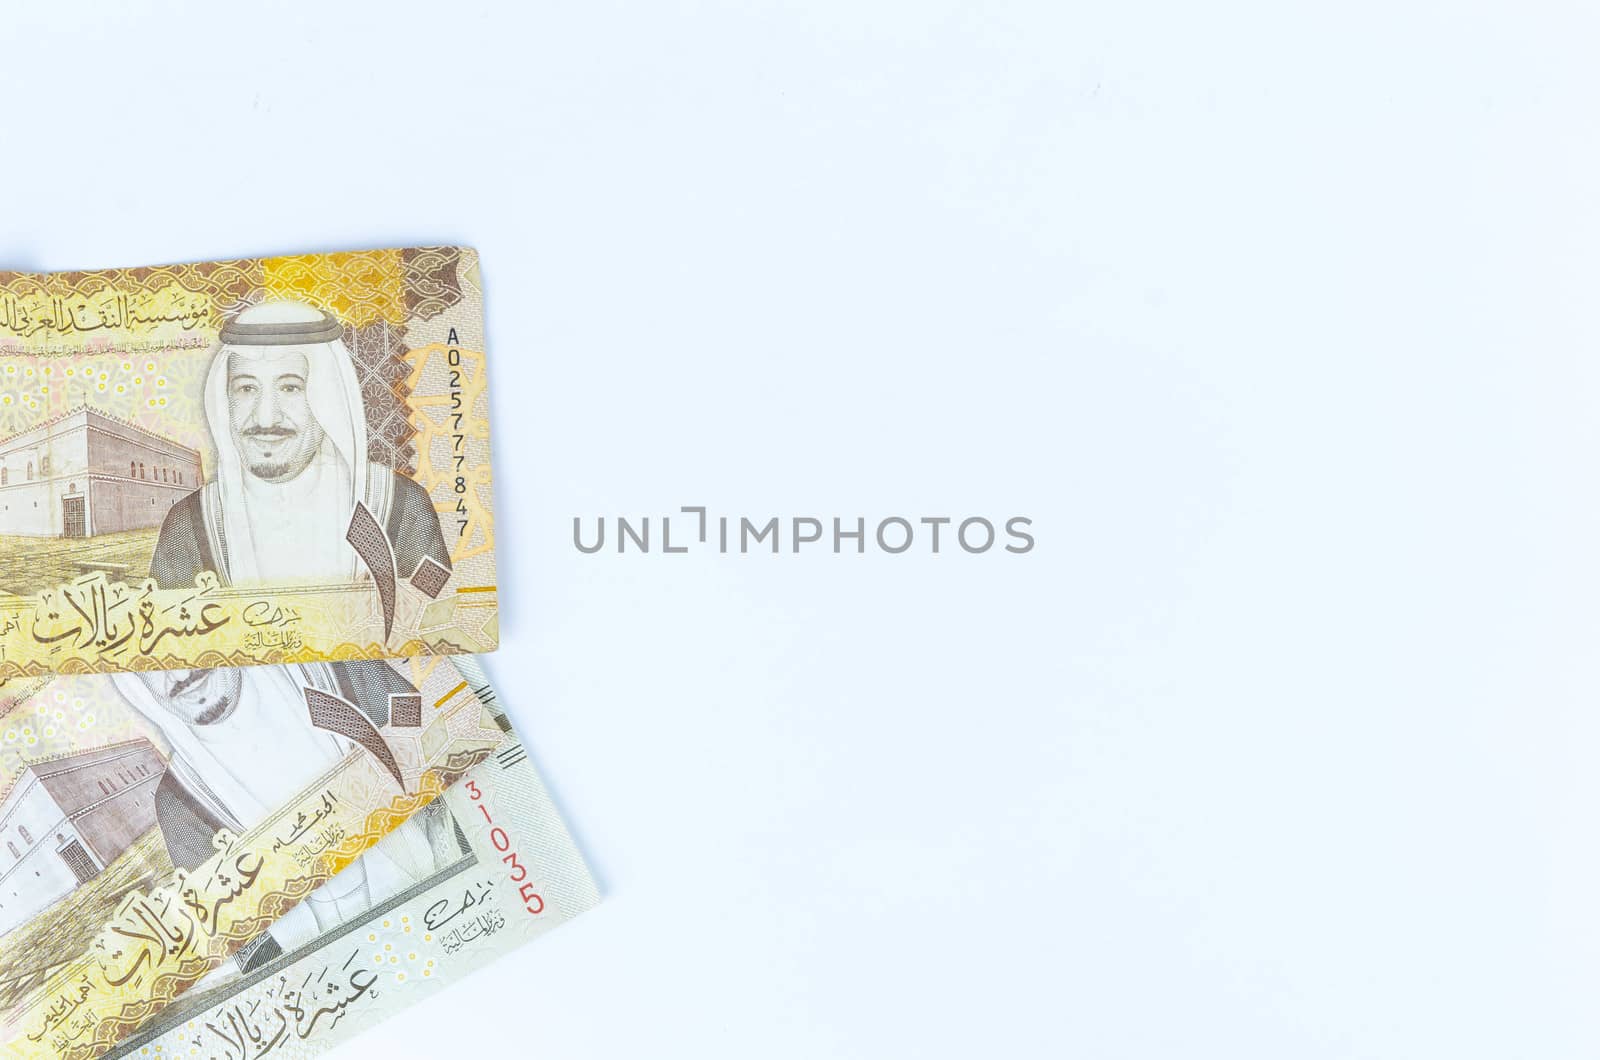 Saudi Arabia money on white background.